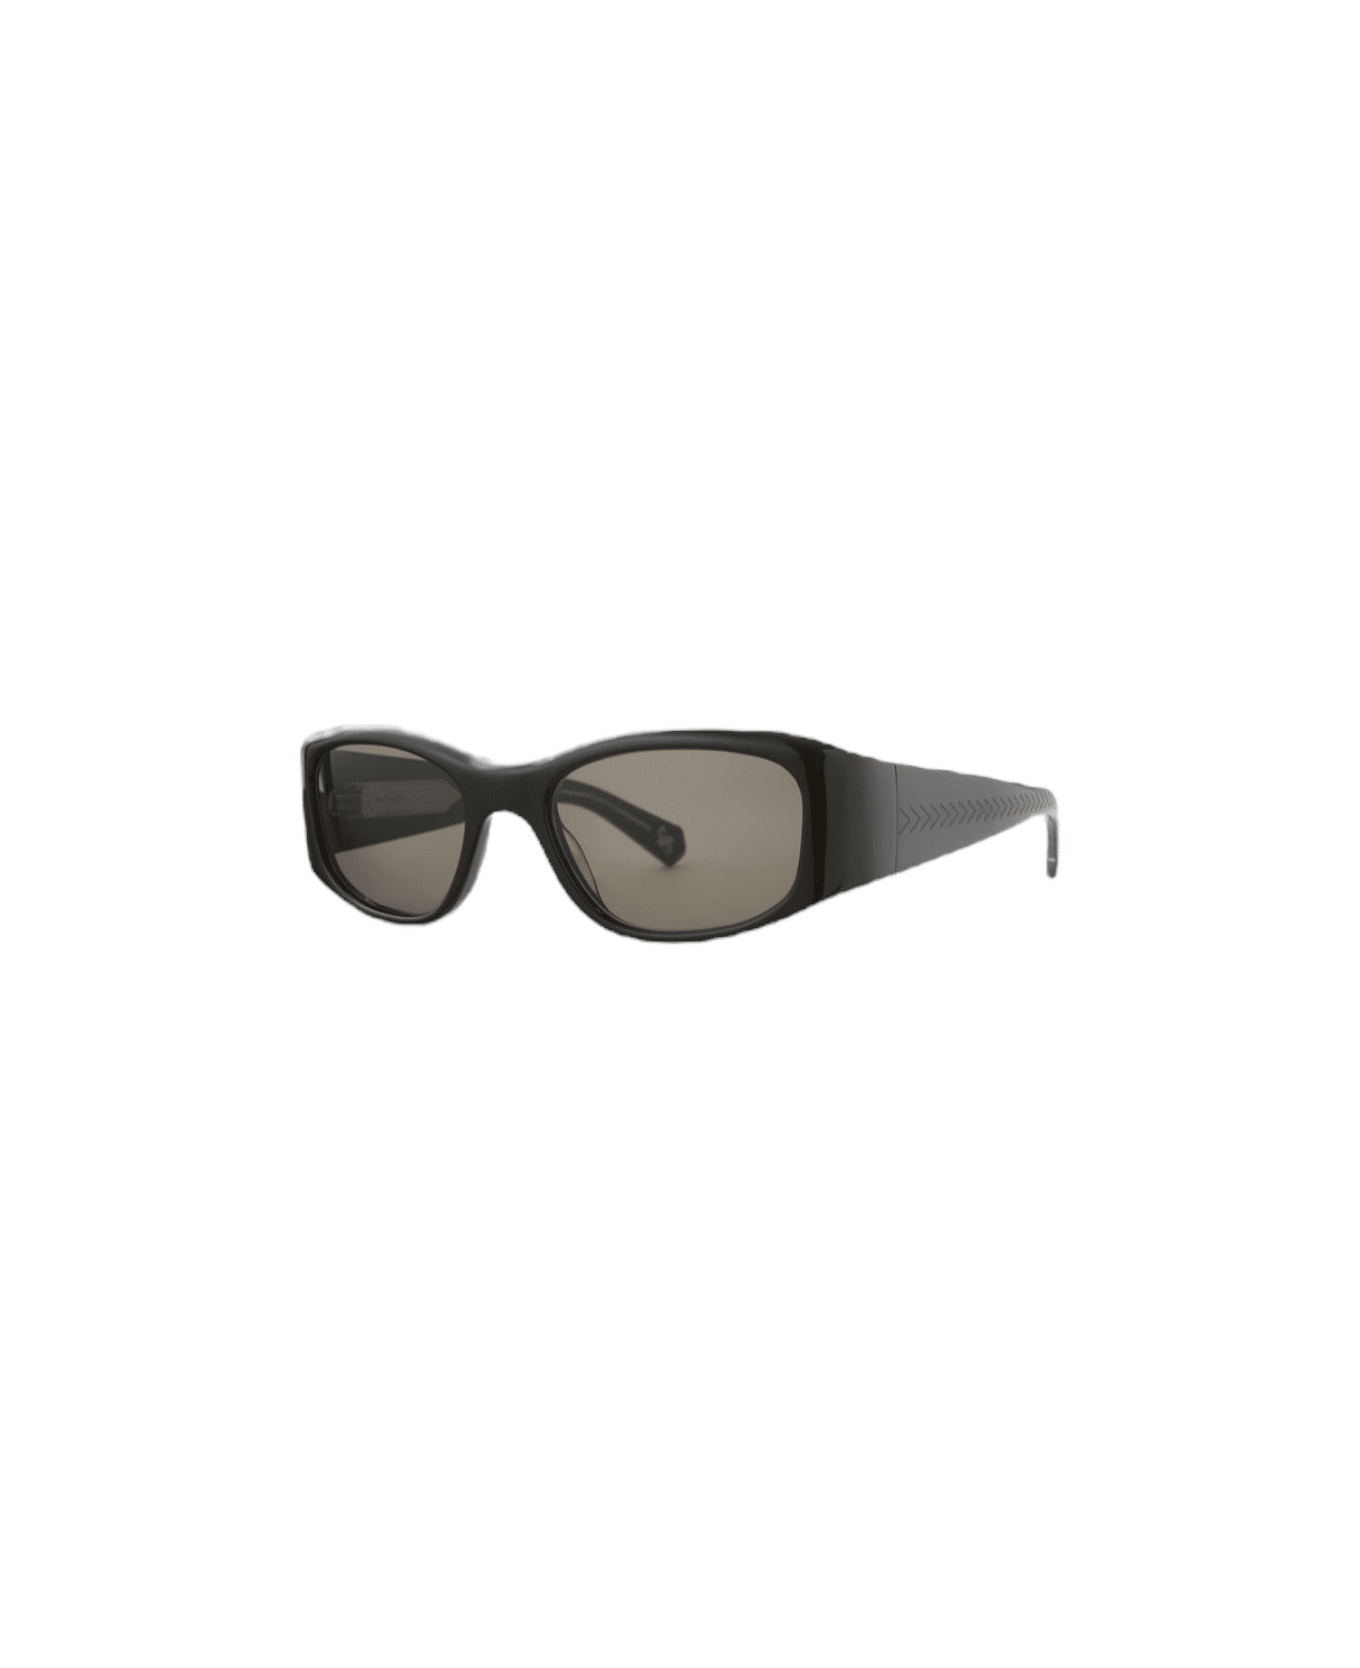 Mr. Leight Aloha - Black Sunglasses